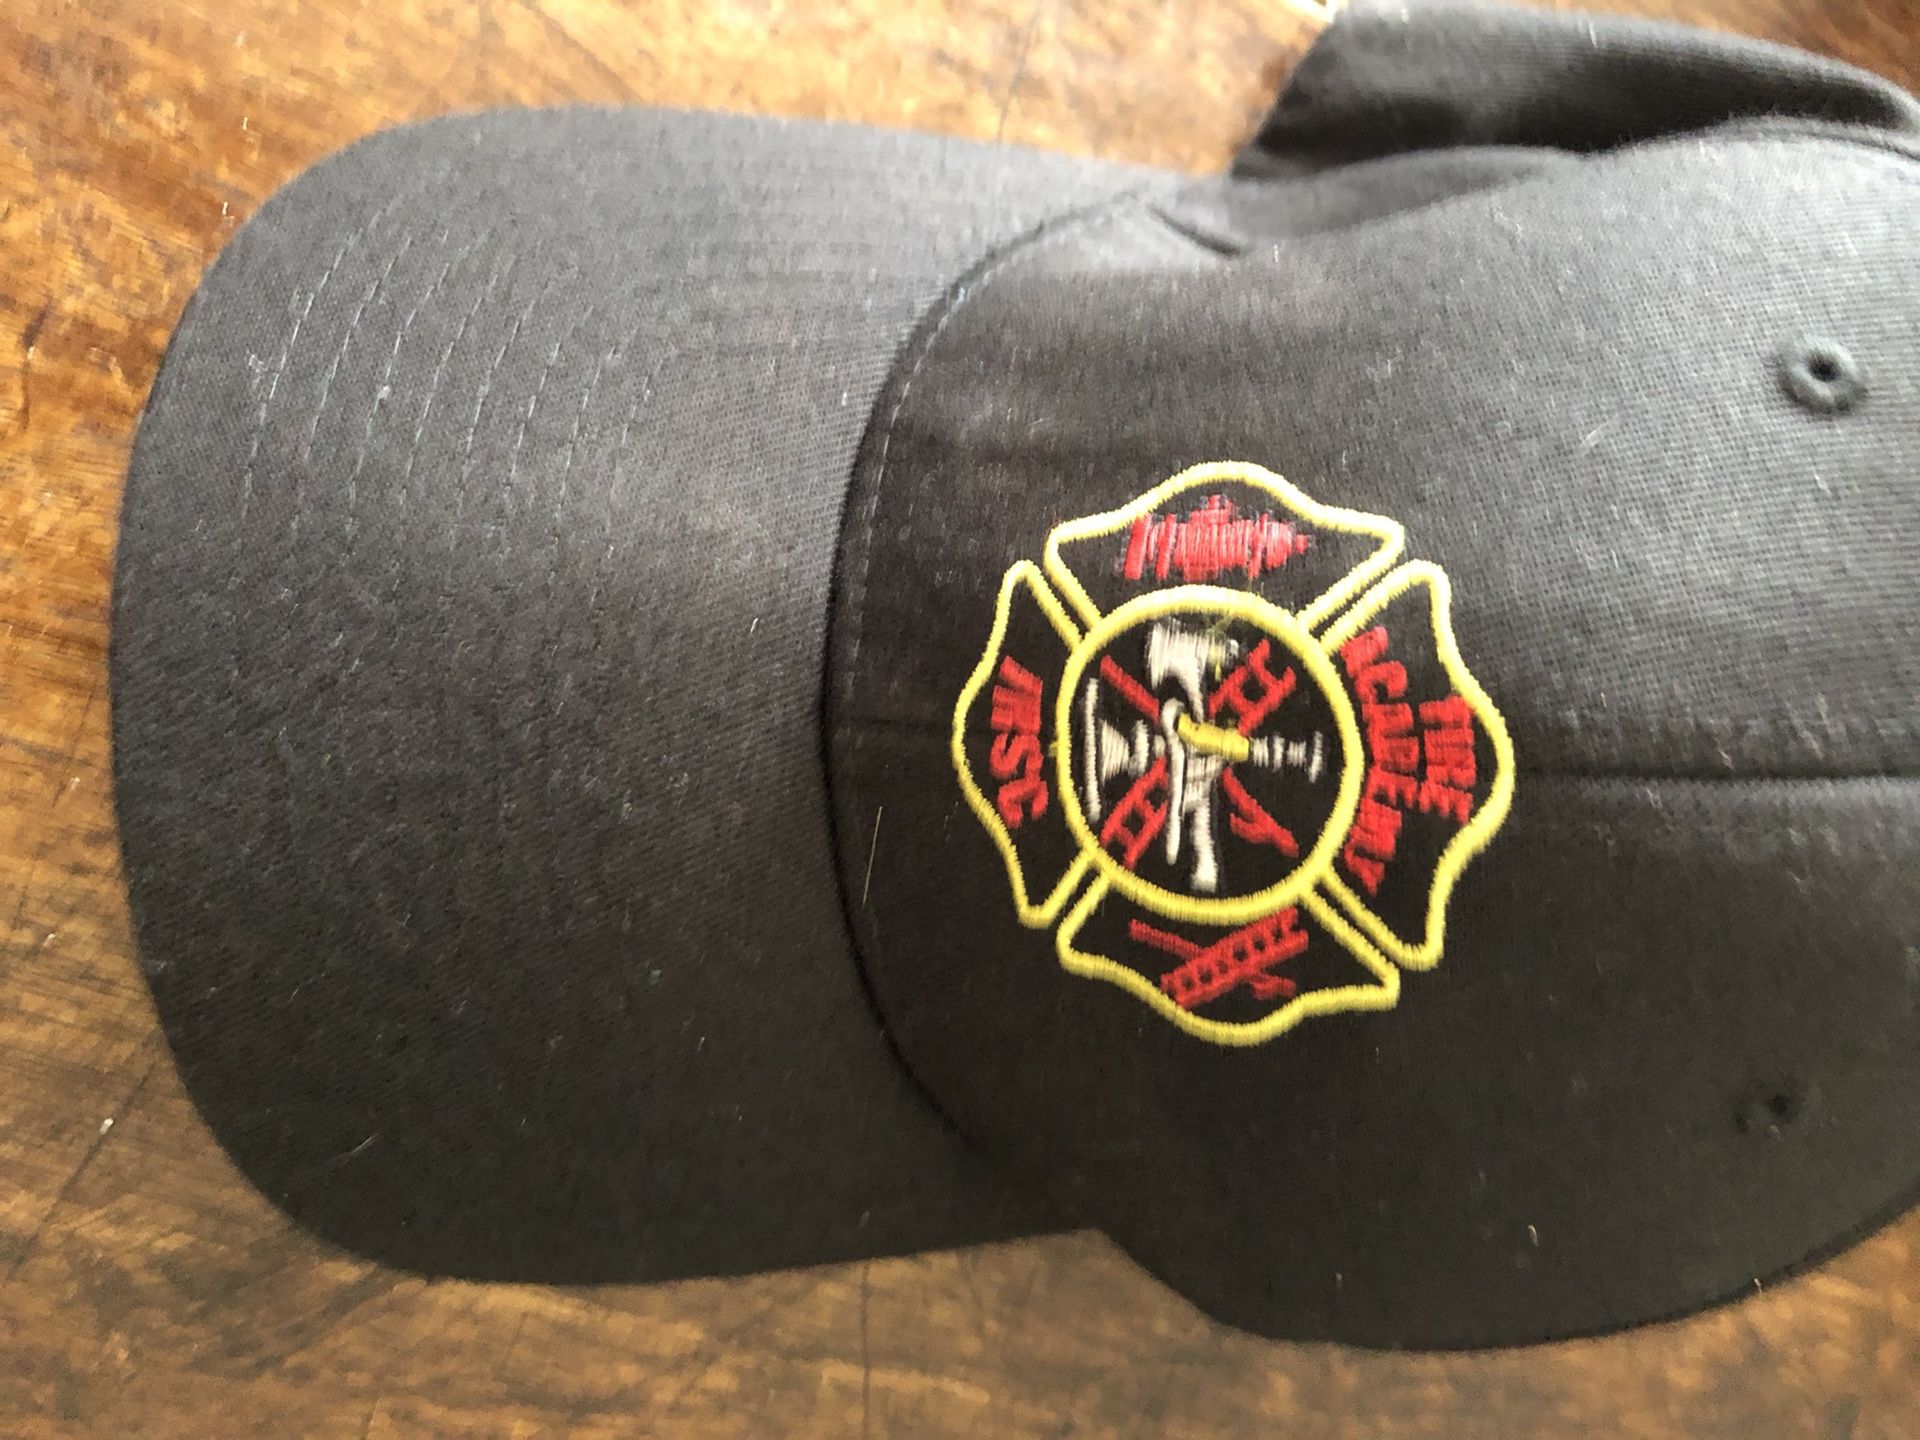 Irsc fire academy hat